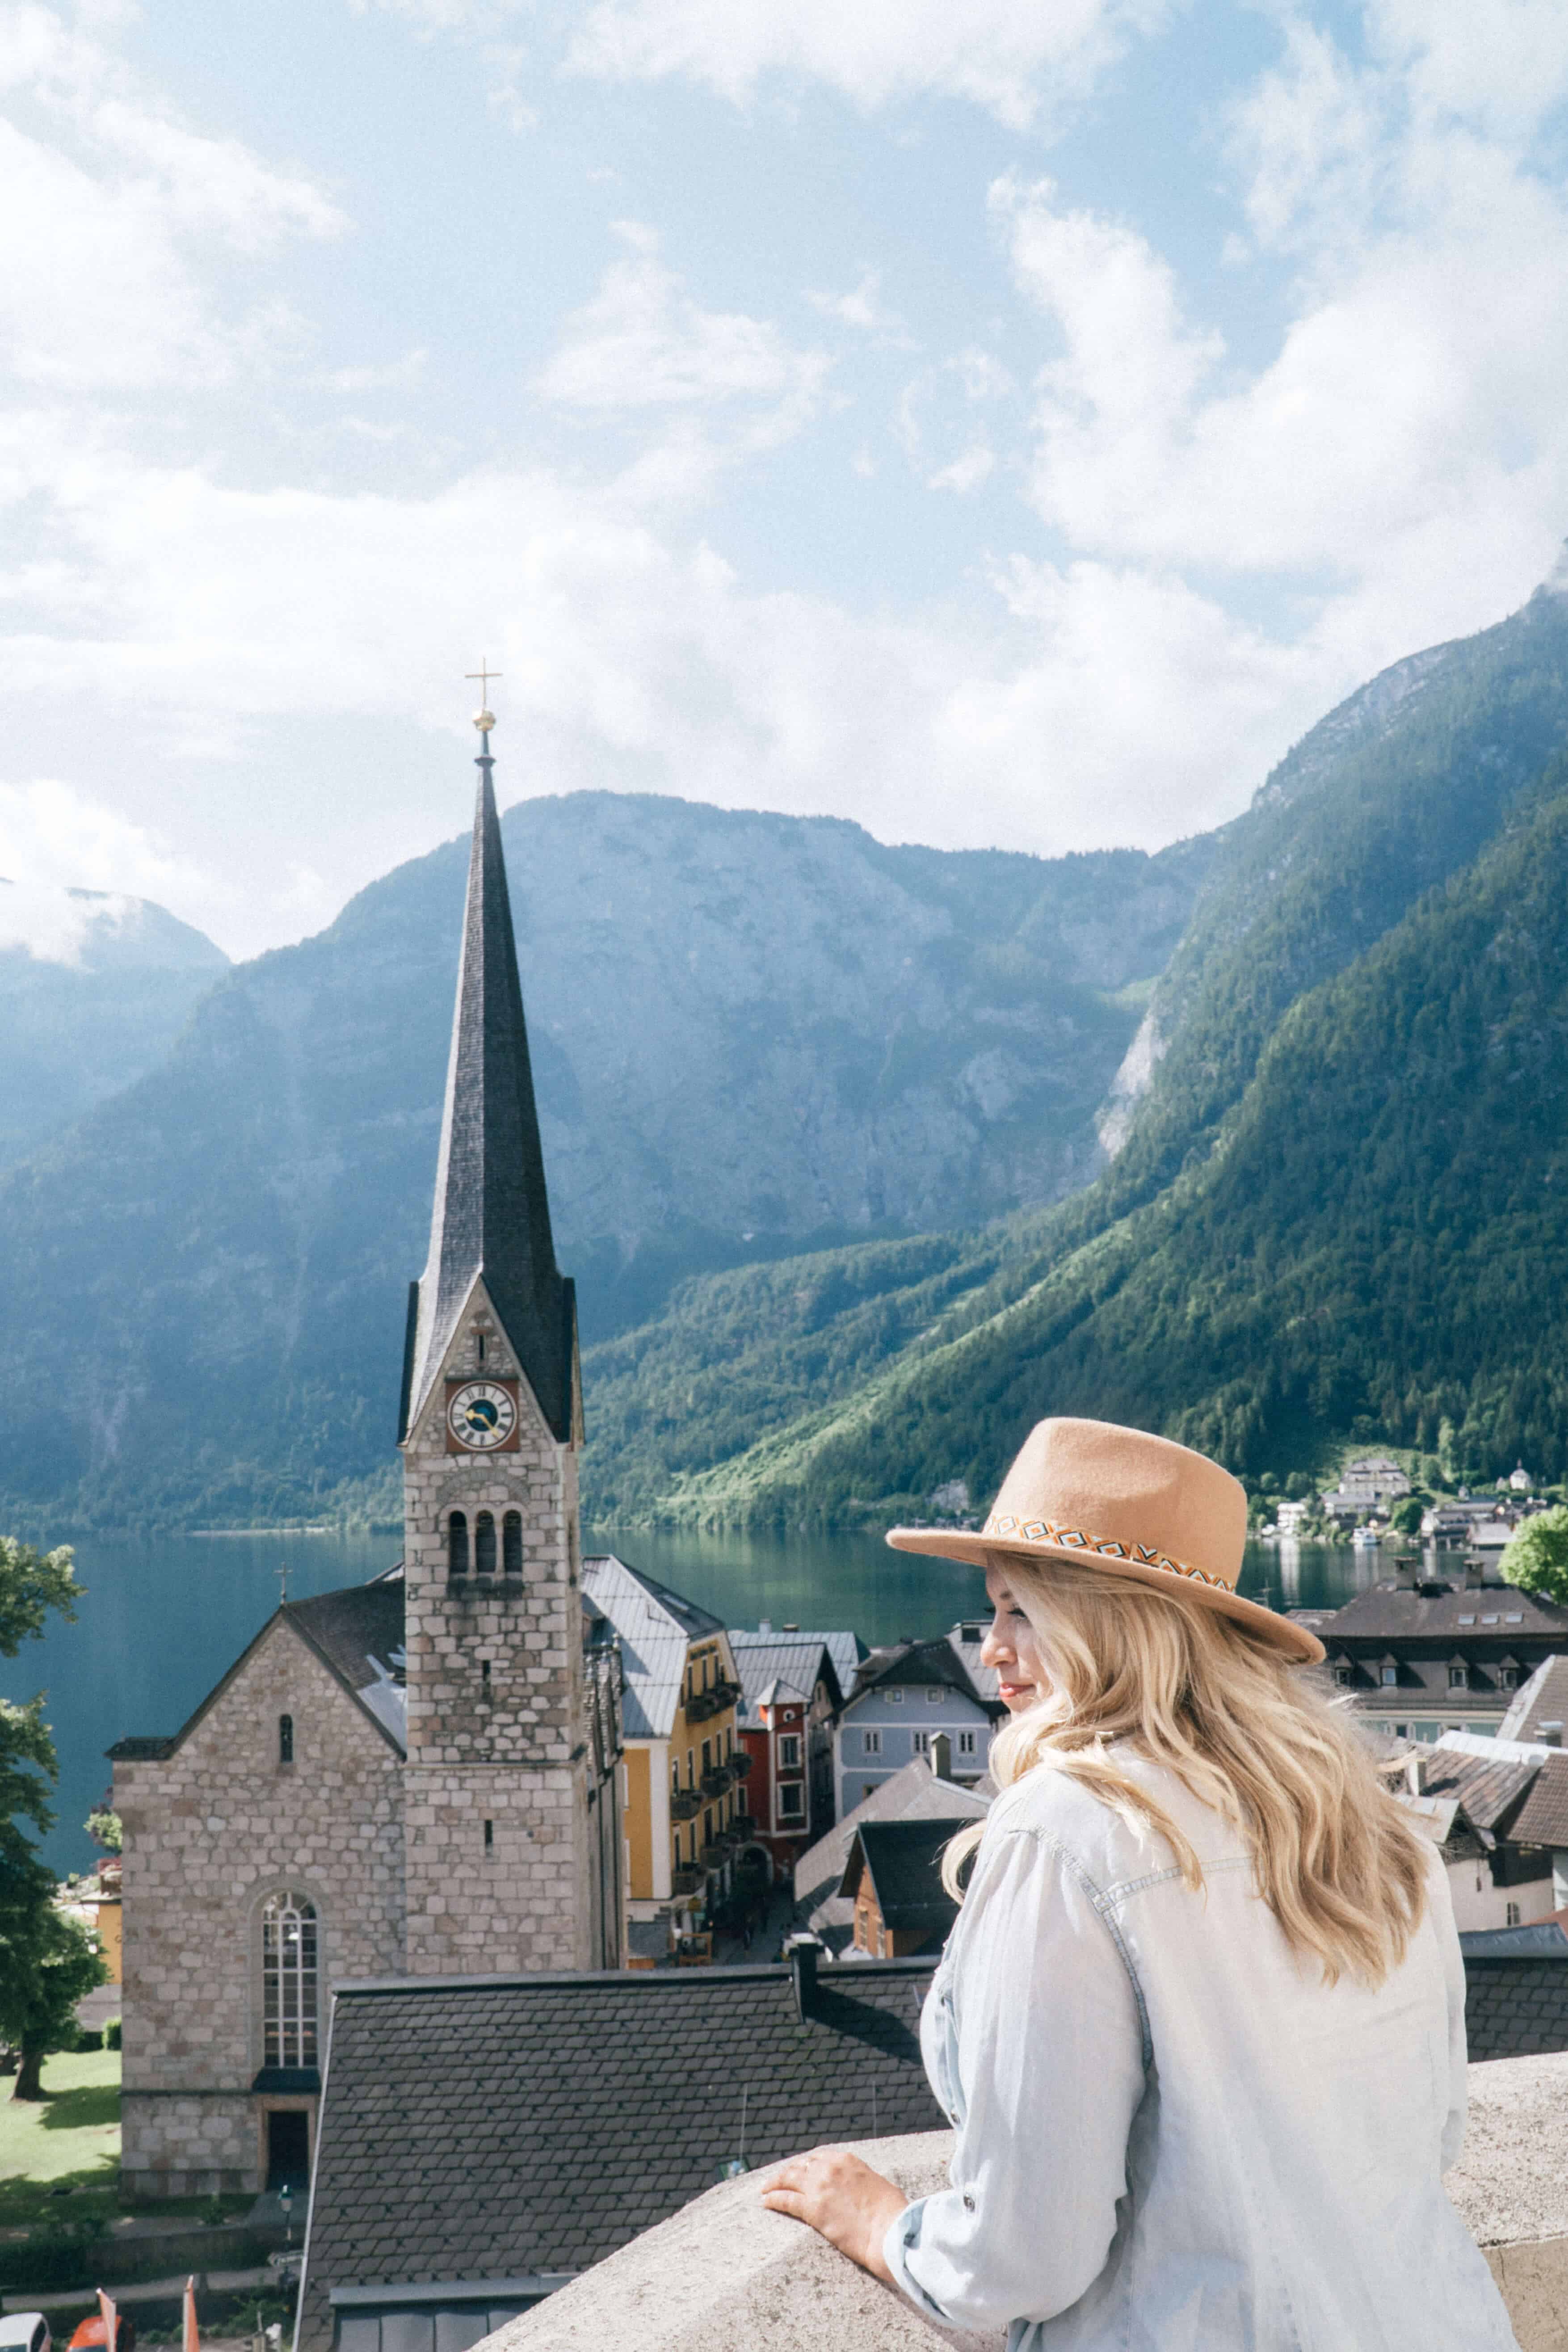 The Ultimate Guide to Hallstatt Austria | Town views | The Republic of Rose | #Hallstatt #Austria #Europe #Travel